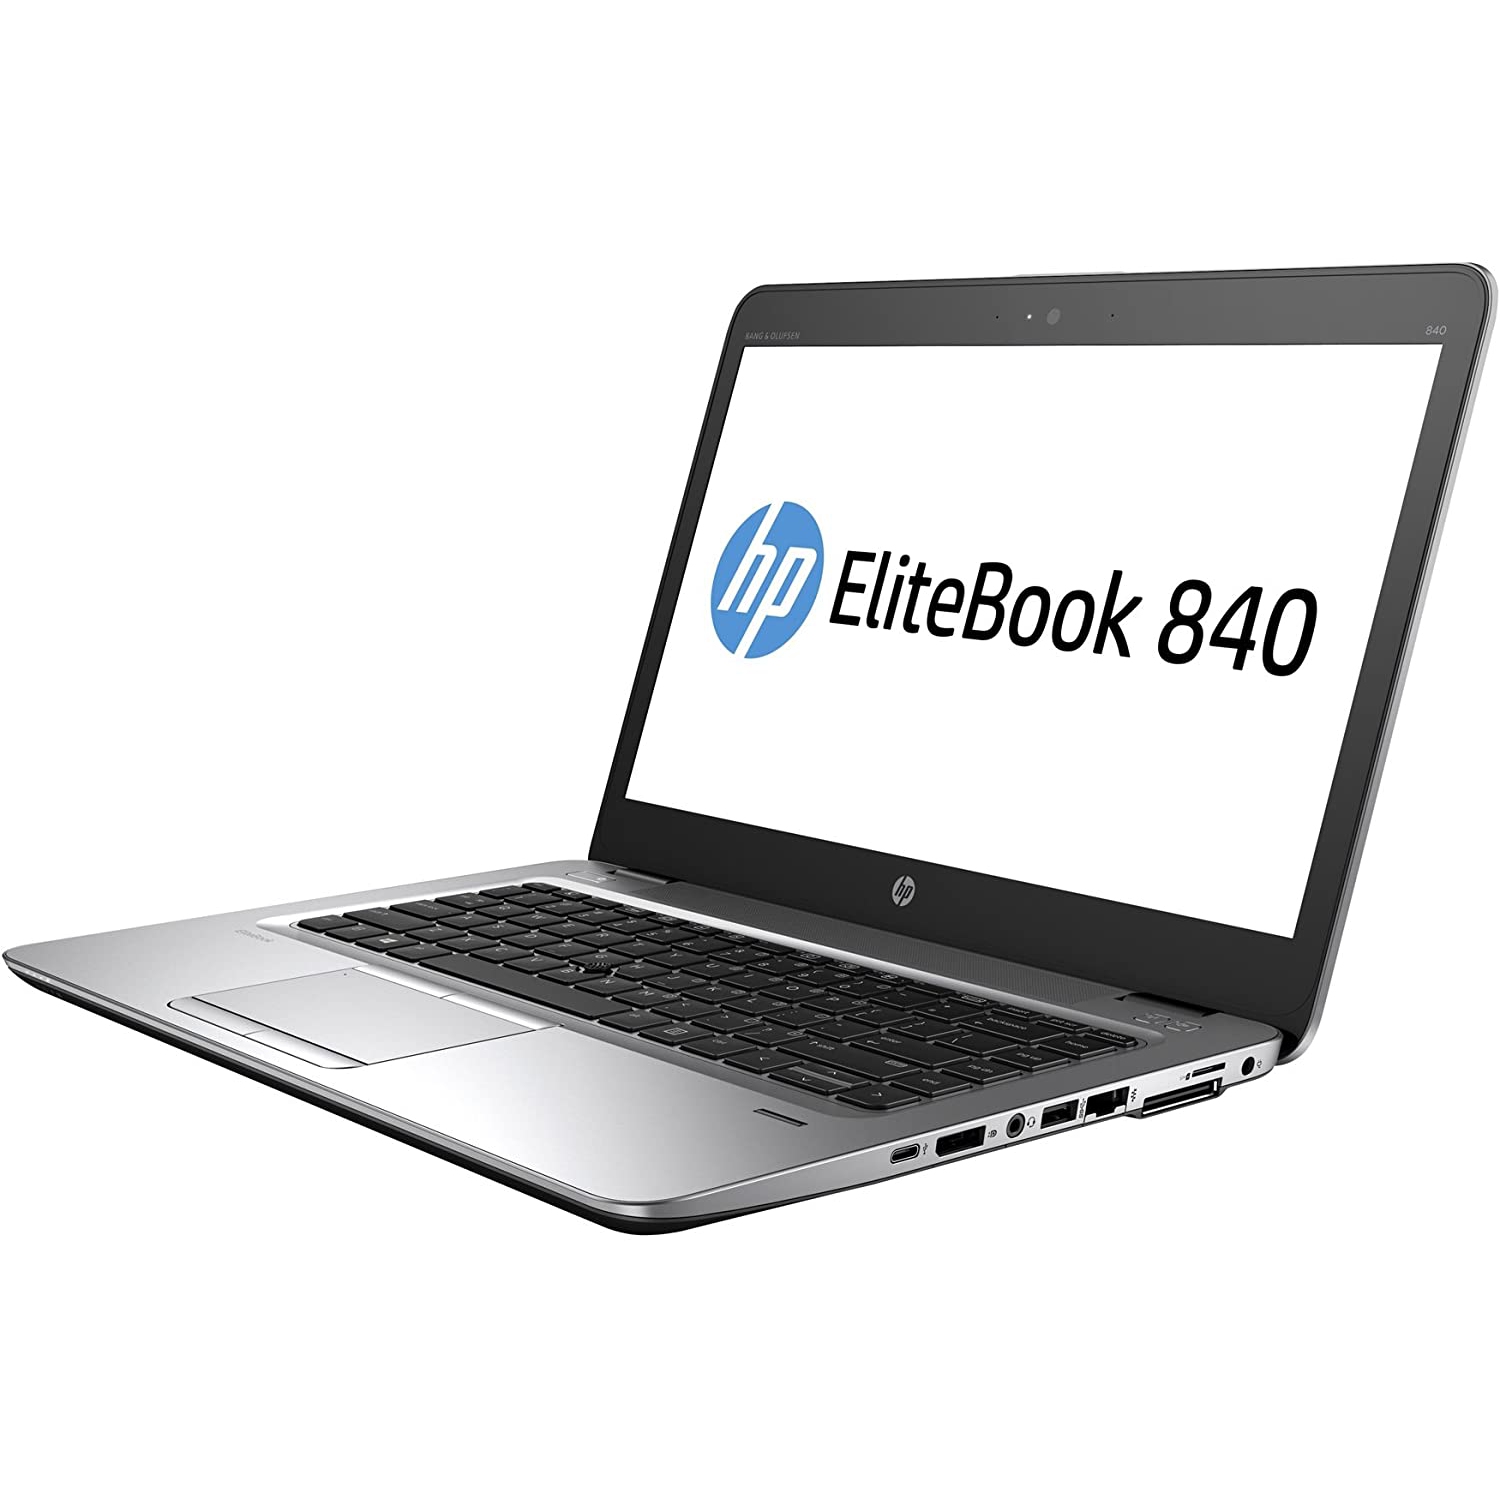 Refurbished (Good) - HP Elitebook 840 G1 14" Touch Screen Laptop, Intel Core i5-4300U 1.9GHz, 8GB RAM, 180GB SSD, Webcam, VGA, Display Port, Windows 10 Pro.